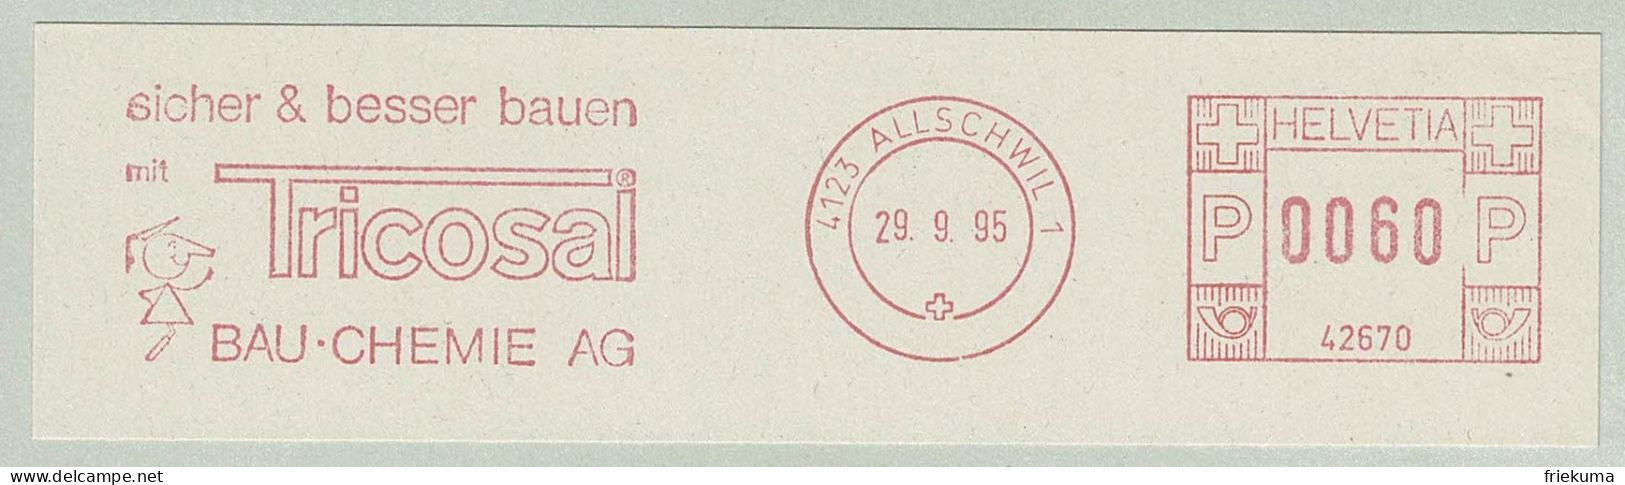 Schweiz / Helvetia 1995, Freistempel / EMA / Meterstamp Bau Chemie AG Allschwil, Tricosal, Bauabdichtung, Bau - Usines & Industries